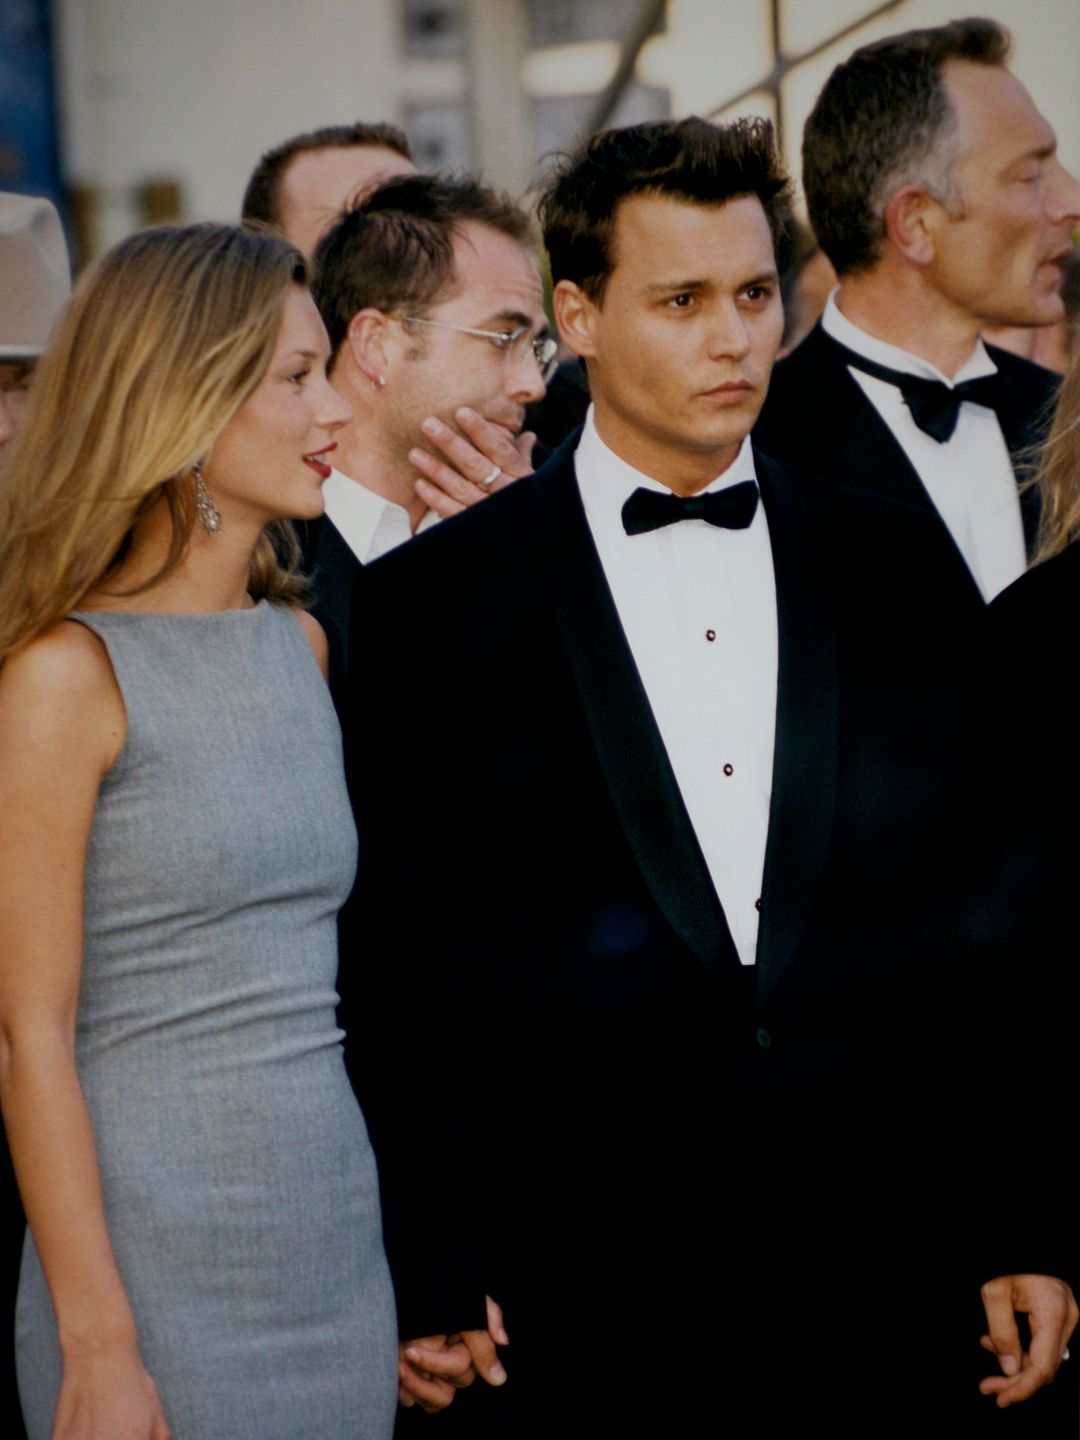 Kate Moss in a grey dress with then-boyfriend Johnny Depp